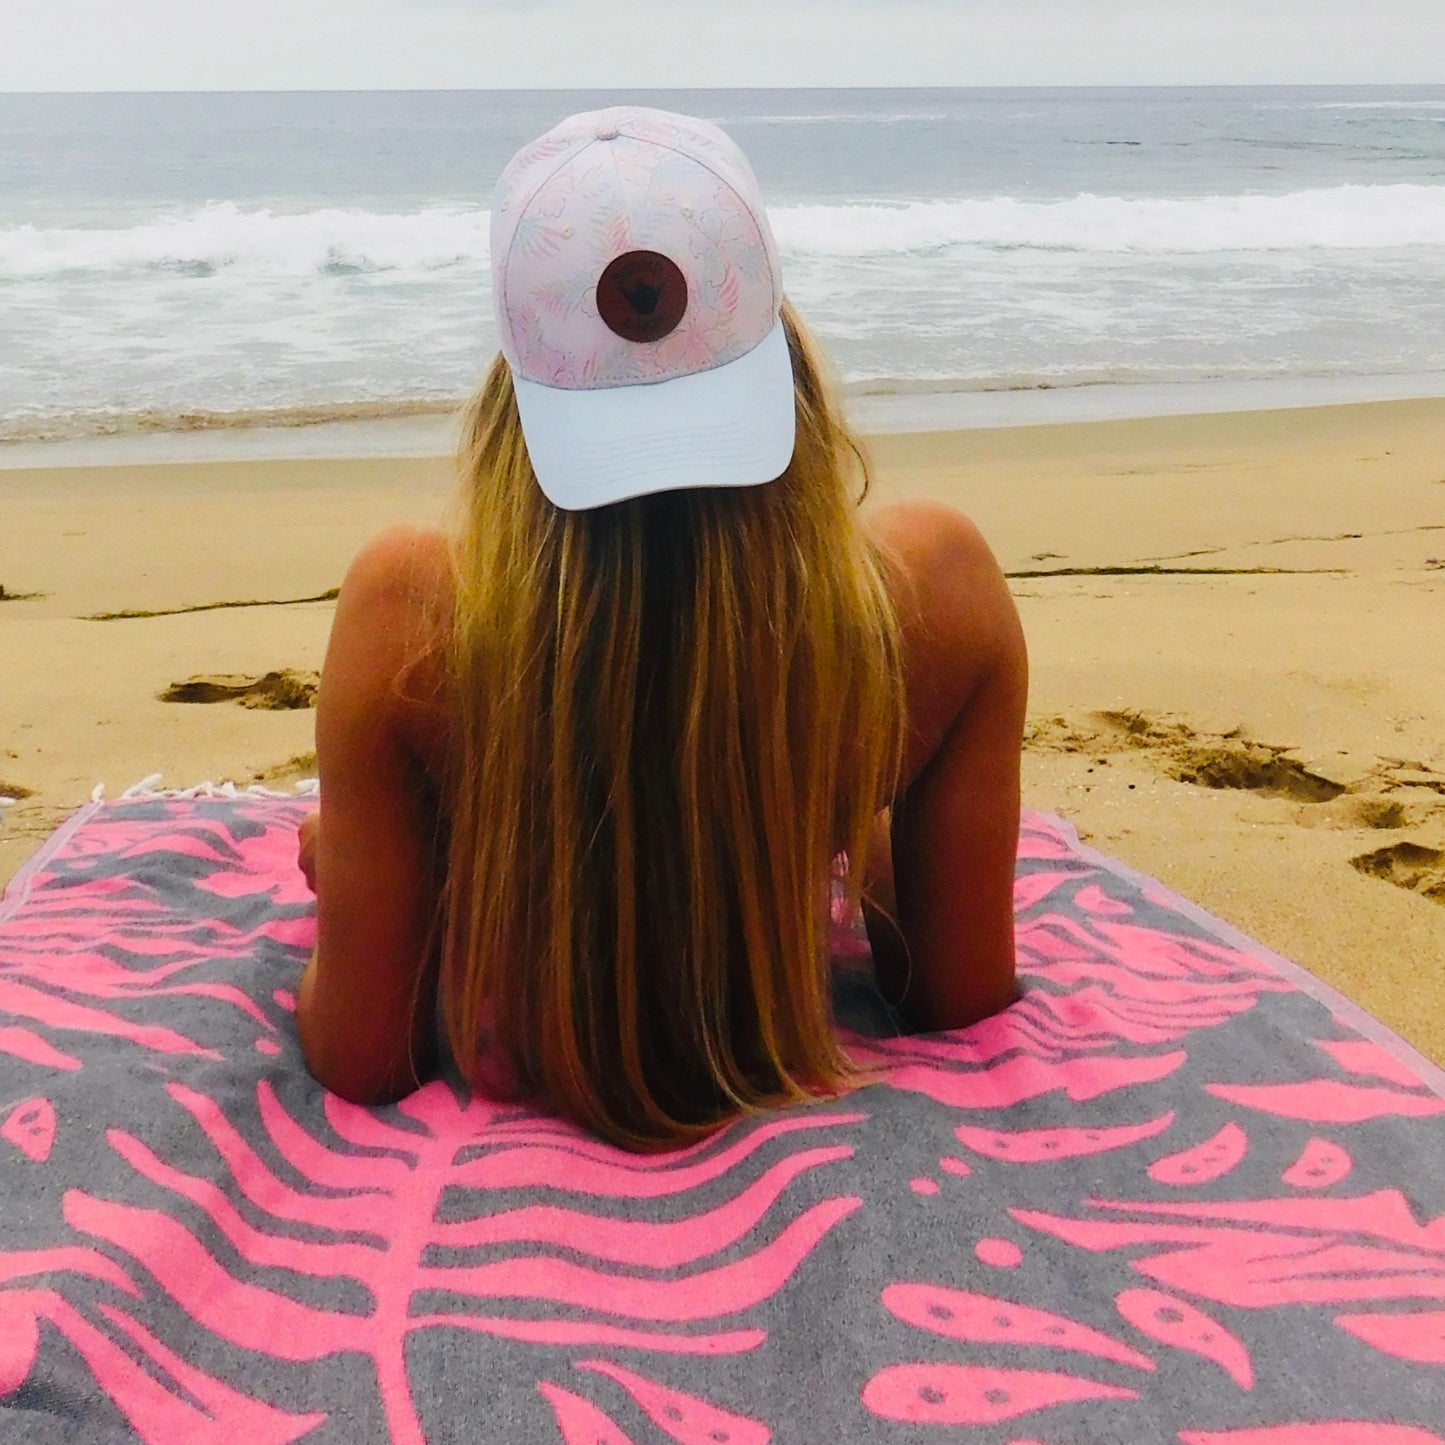 Surfer Girl Bundle #2: Bucket hat & cap with 2 surf towels